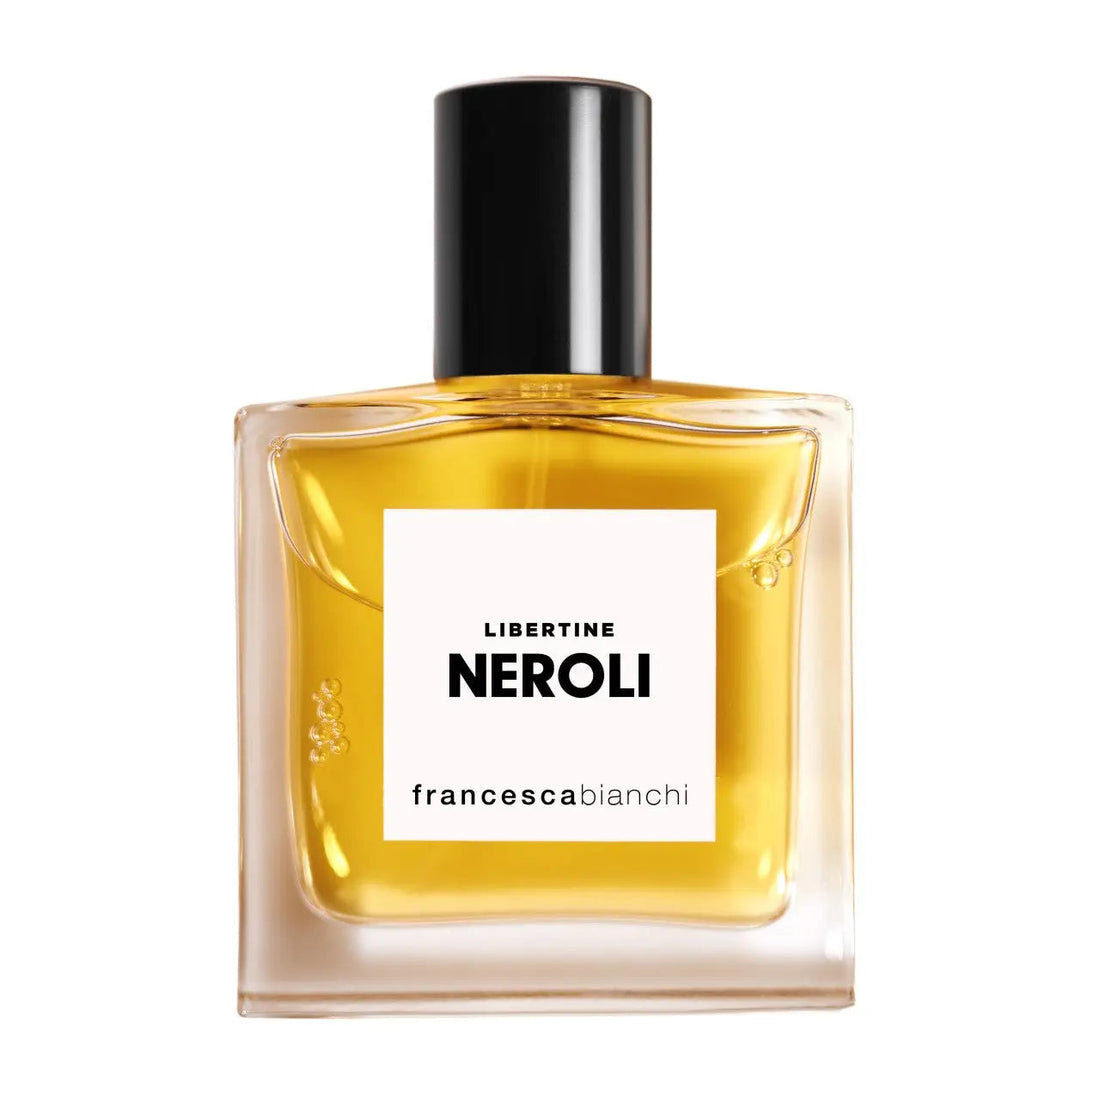 Francesca Bianchi Libertine Neroli Perfume Extract - 30 ml